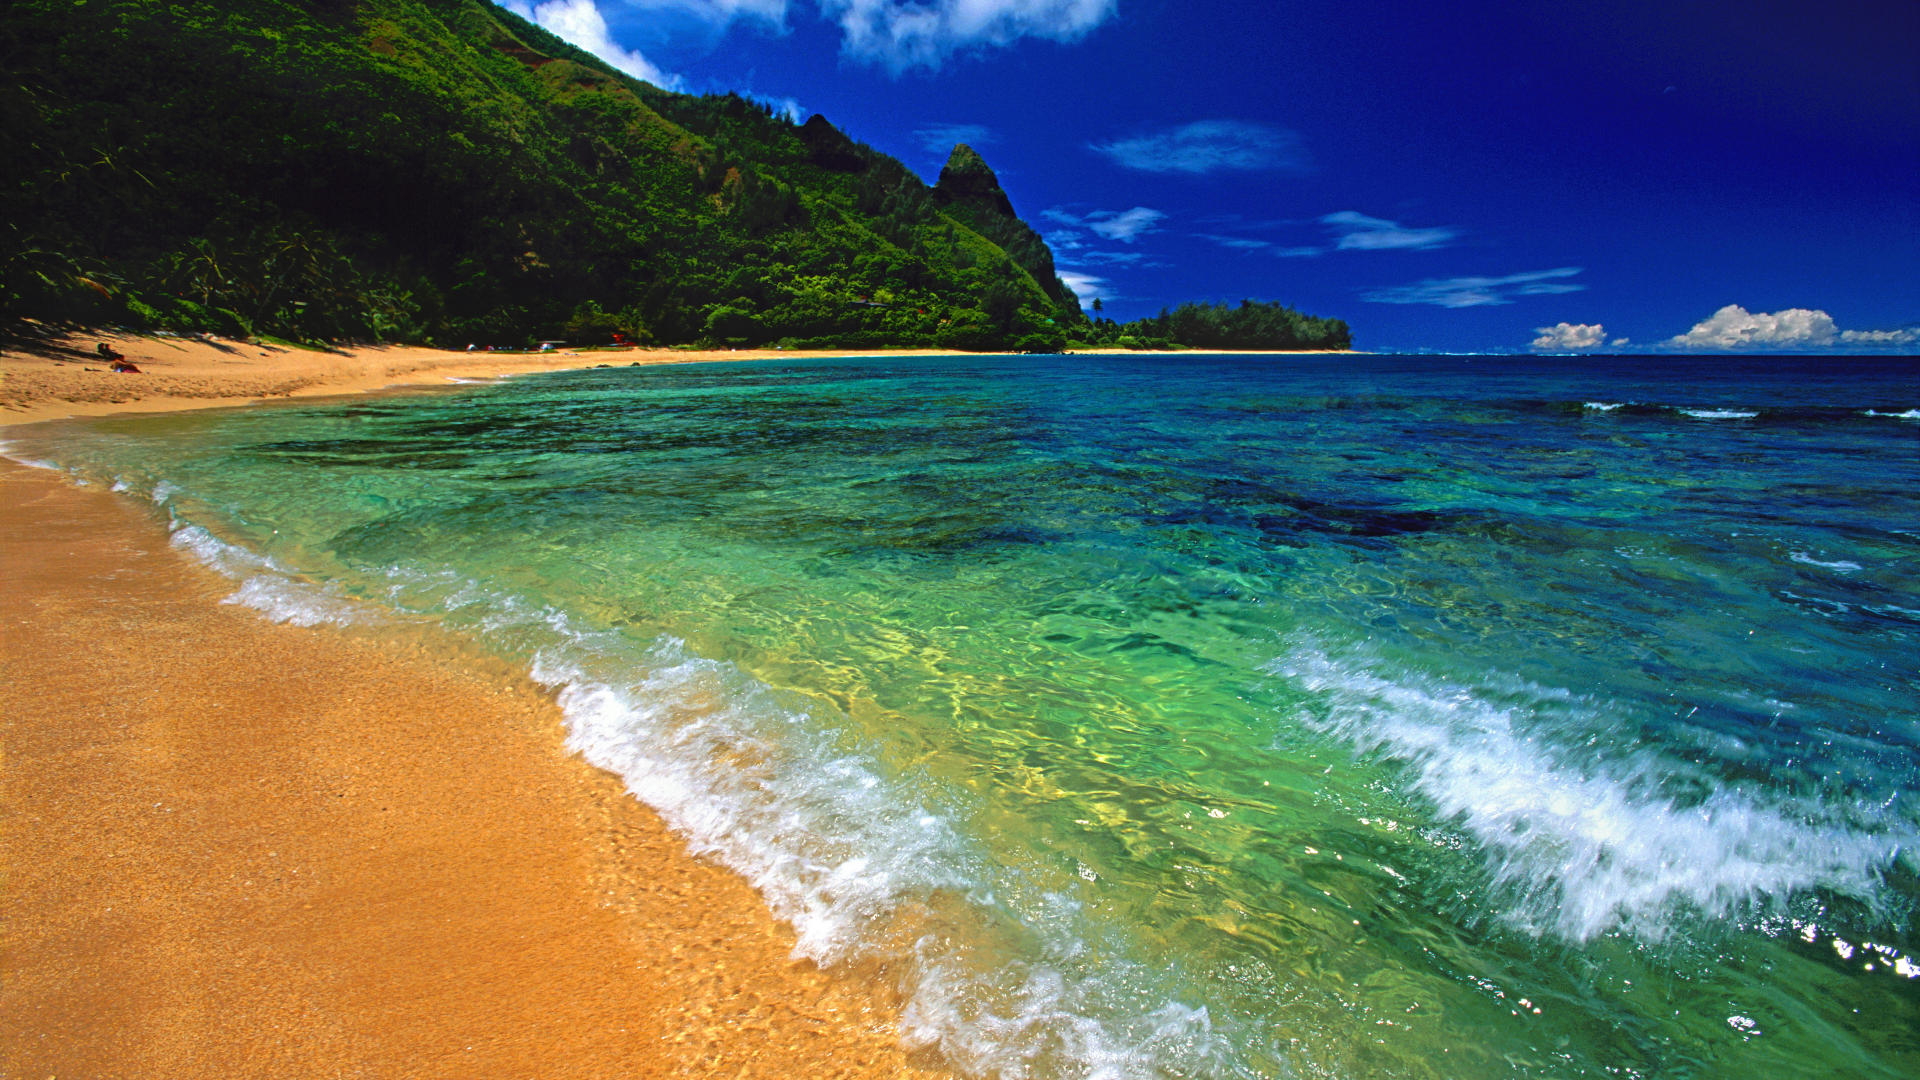  Backgrounds and Wallpaper   Tunnels Beach Kauai Hawaii   Always Free